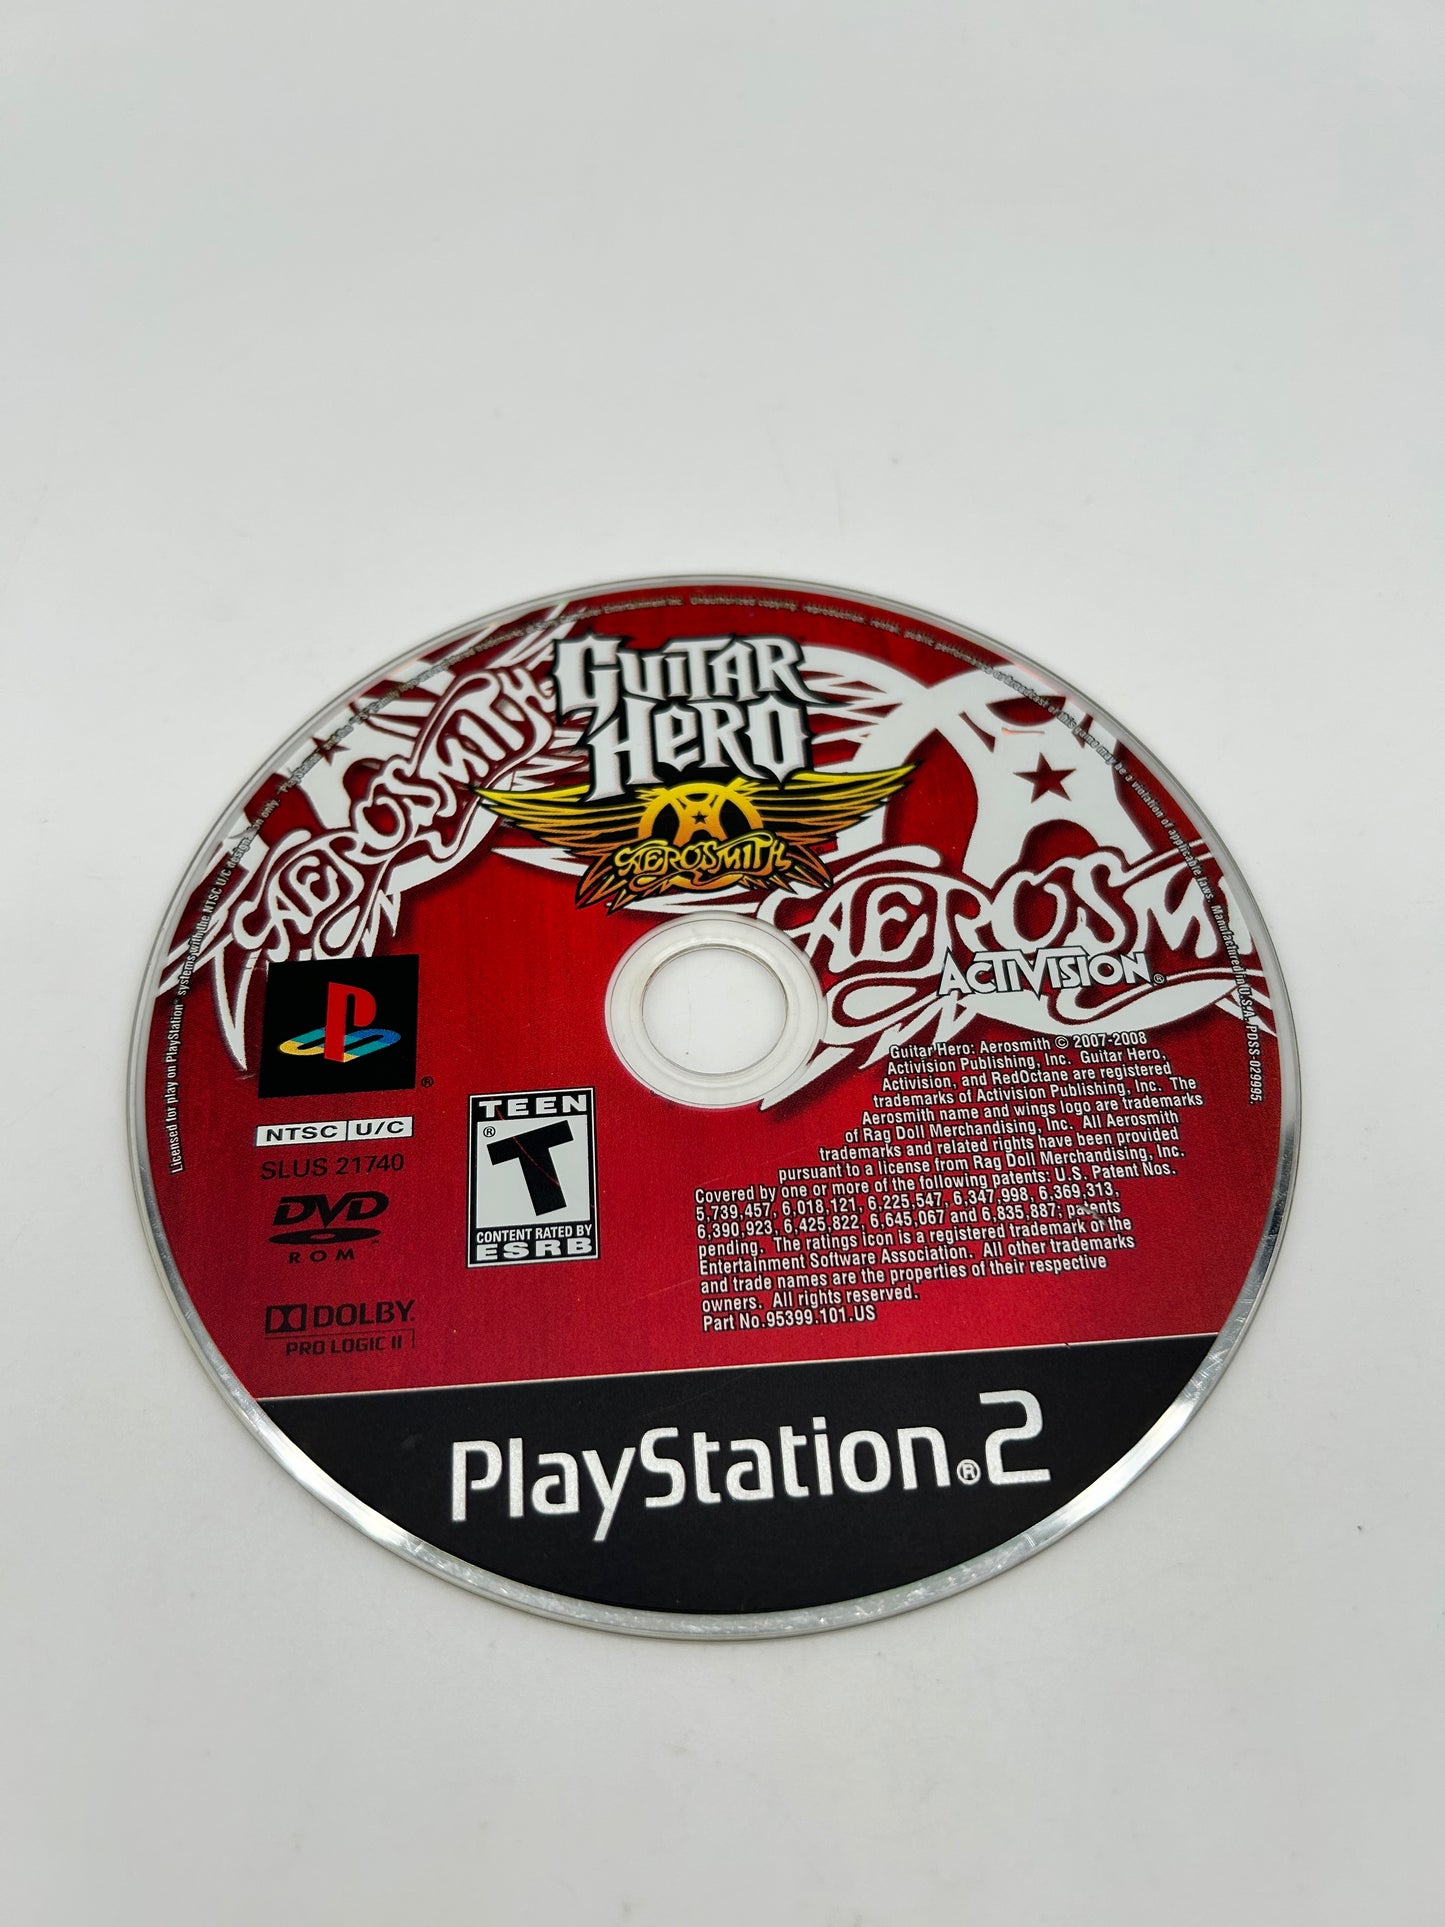 PiXEL-RETRO.COM : SONY PLAYSTATION 2 (PS2) GAME NTSC GUITAR HERO AEROSMITH